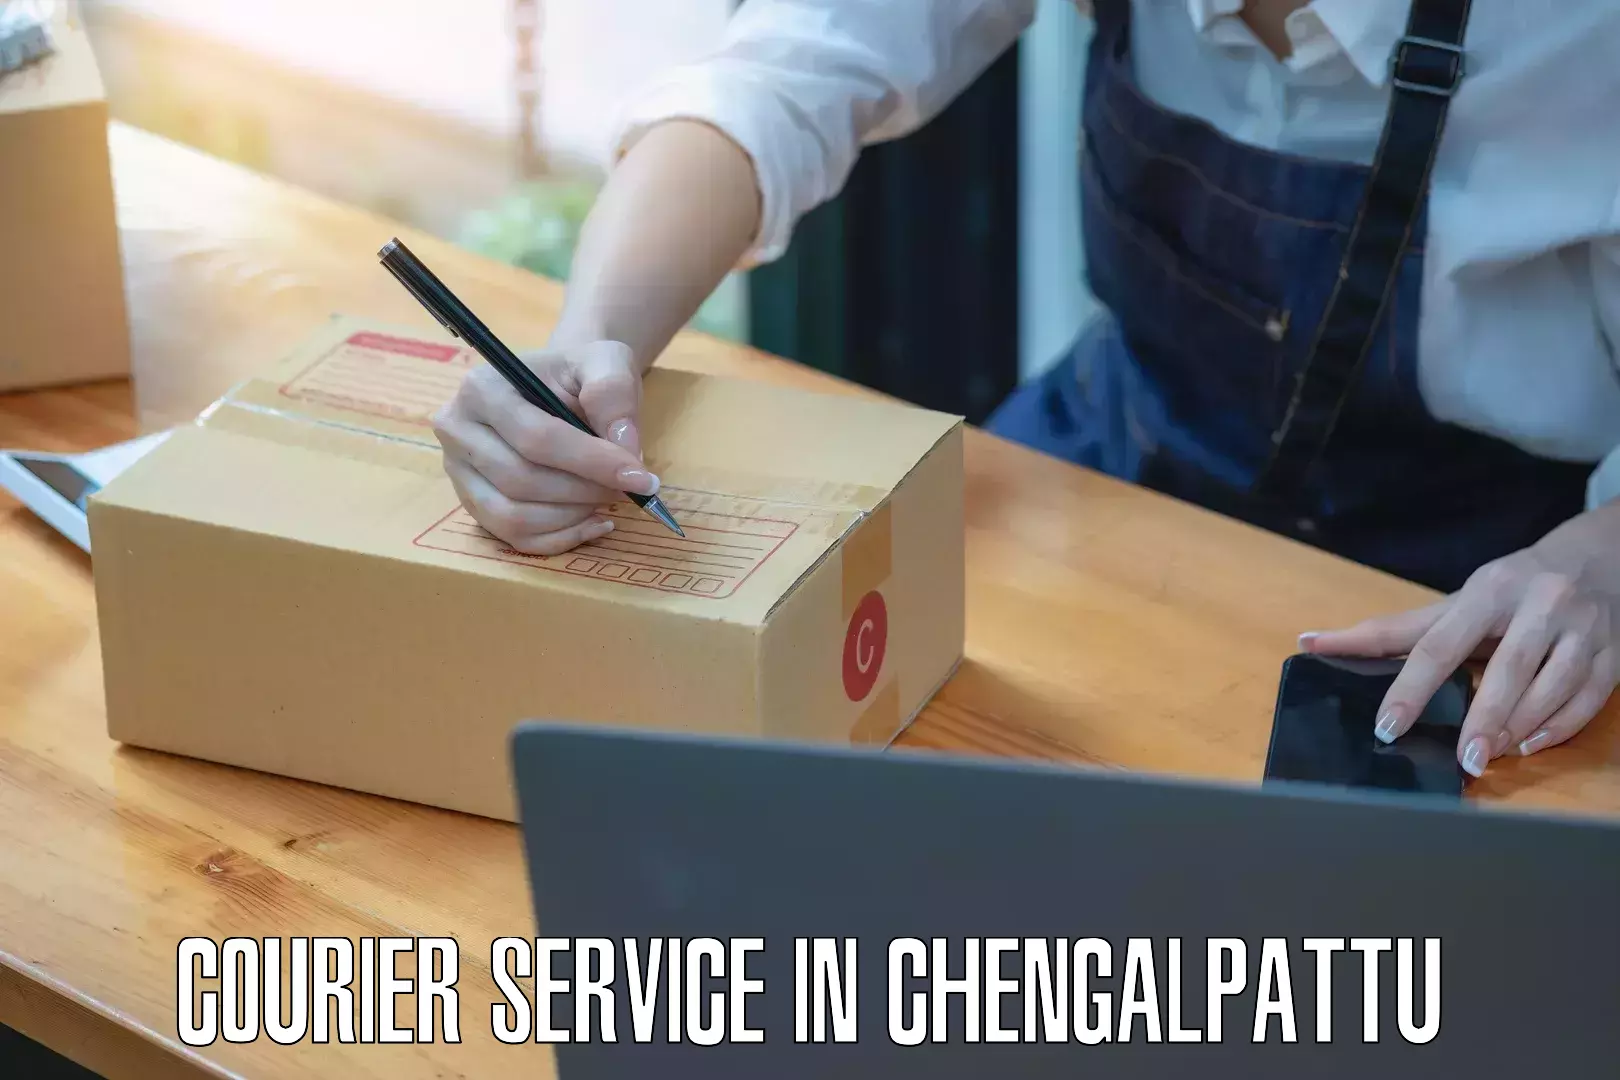 Local delivery service in Chengalpattu